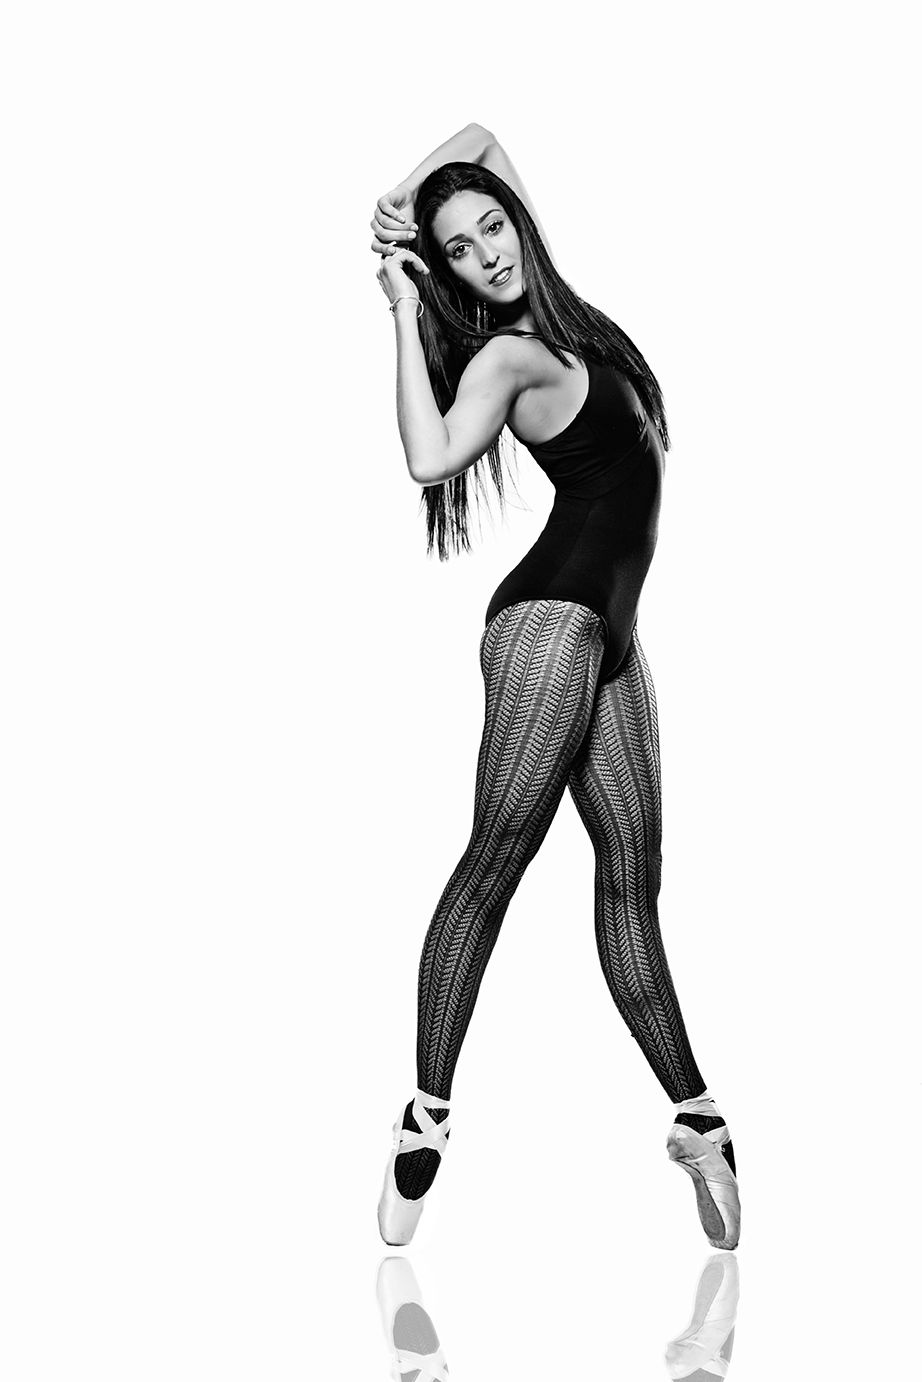 Leah Cravenho - Dancer